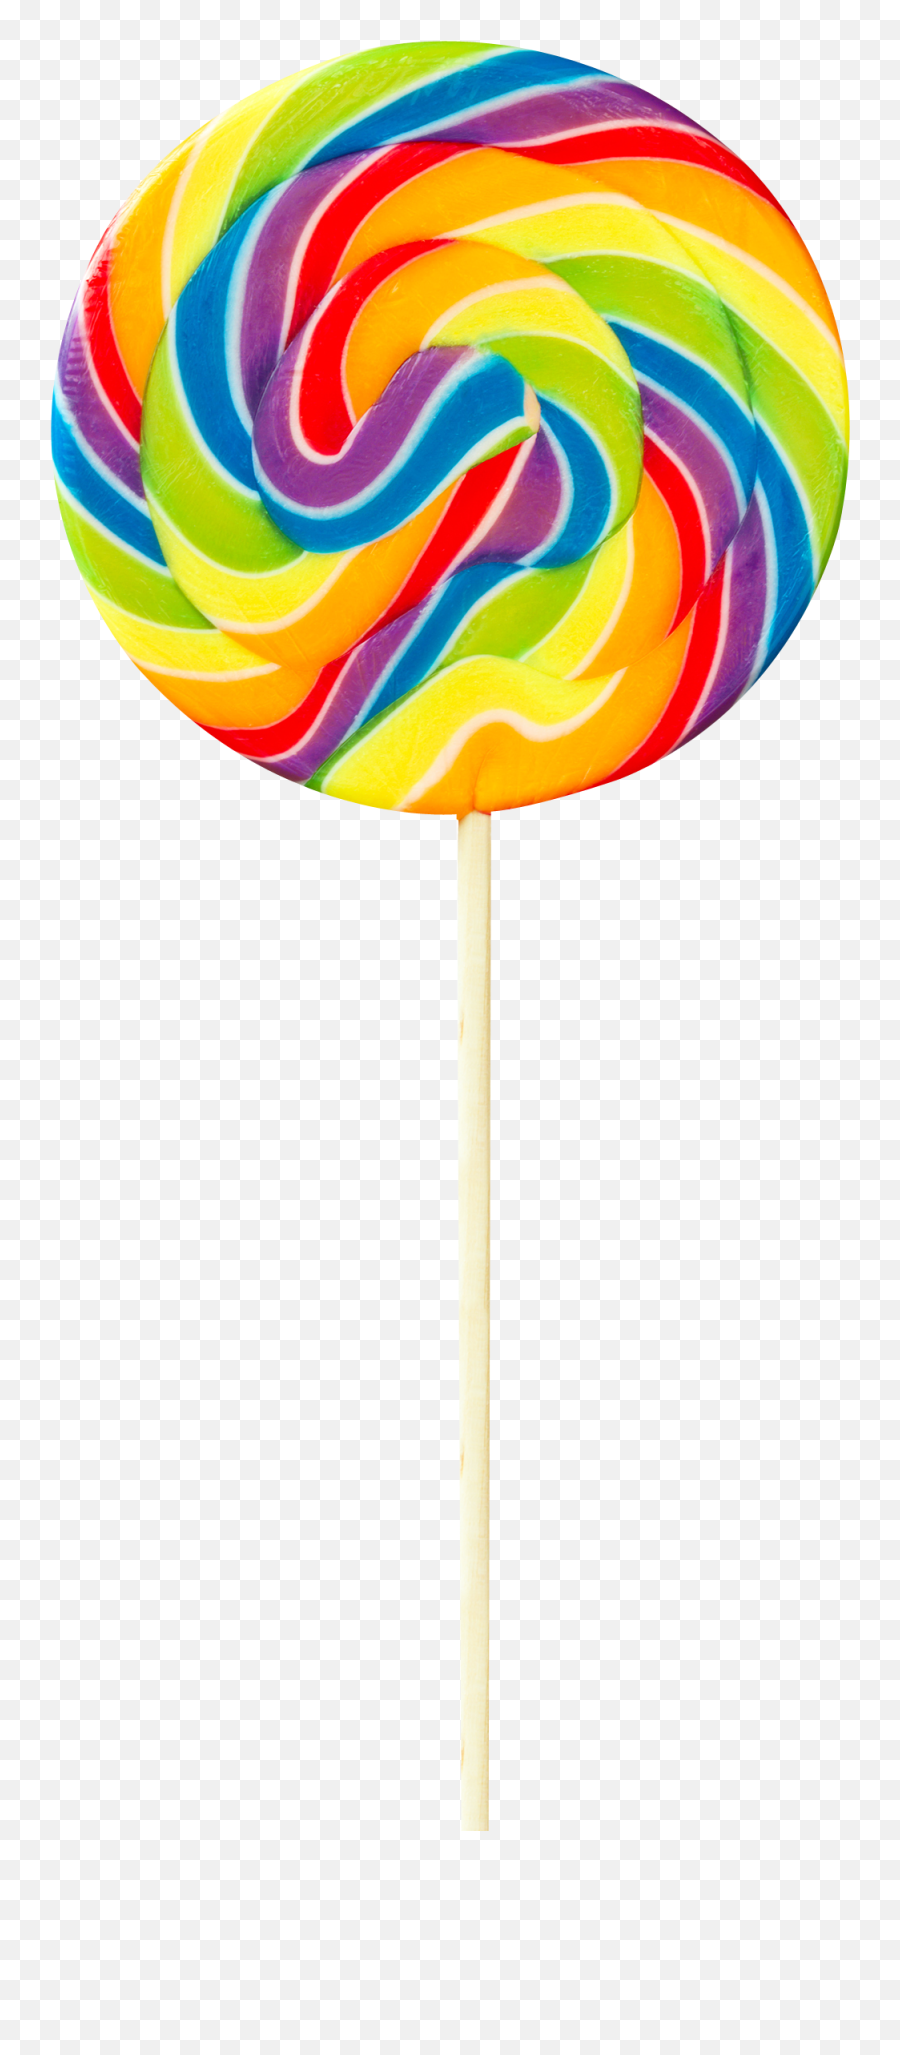 Swirl Lollipop - Transparent Background Lollipop Transparent Emoji,Emoji Lollipops